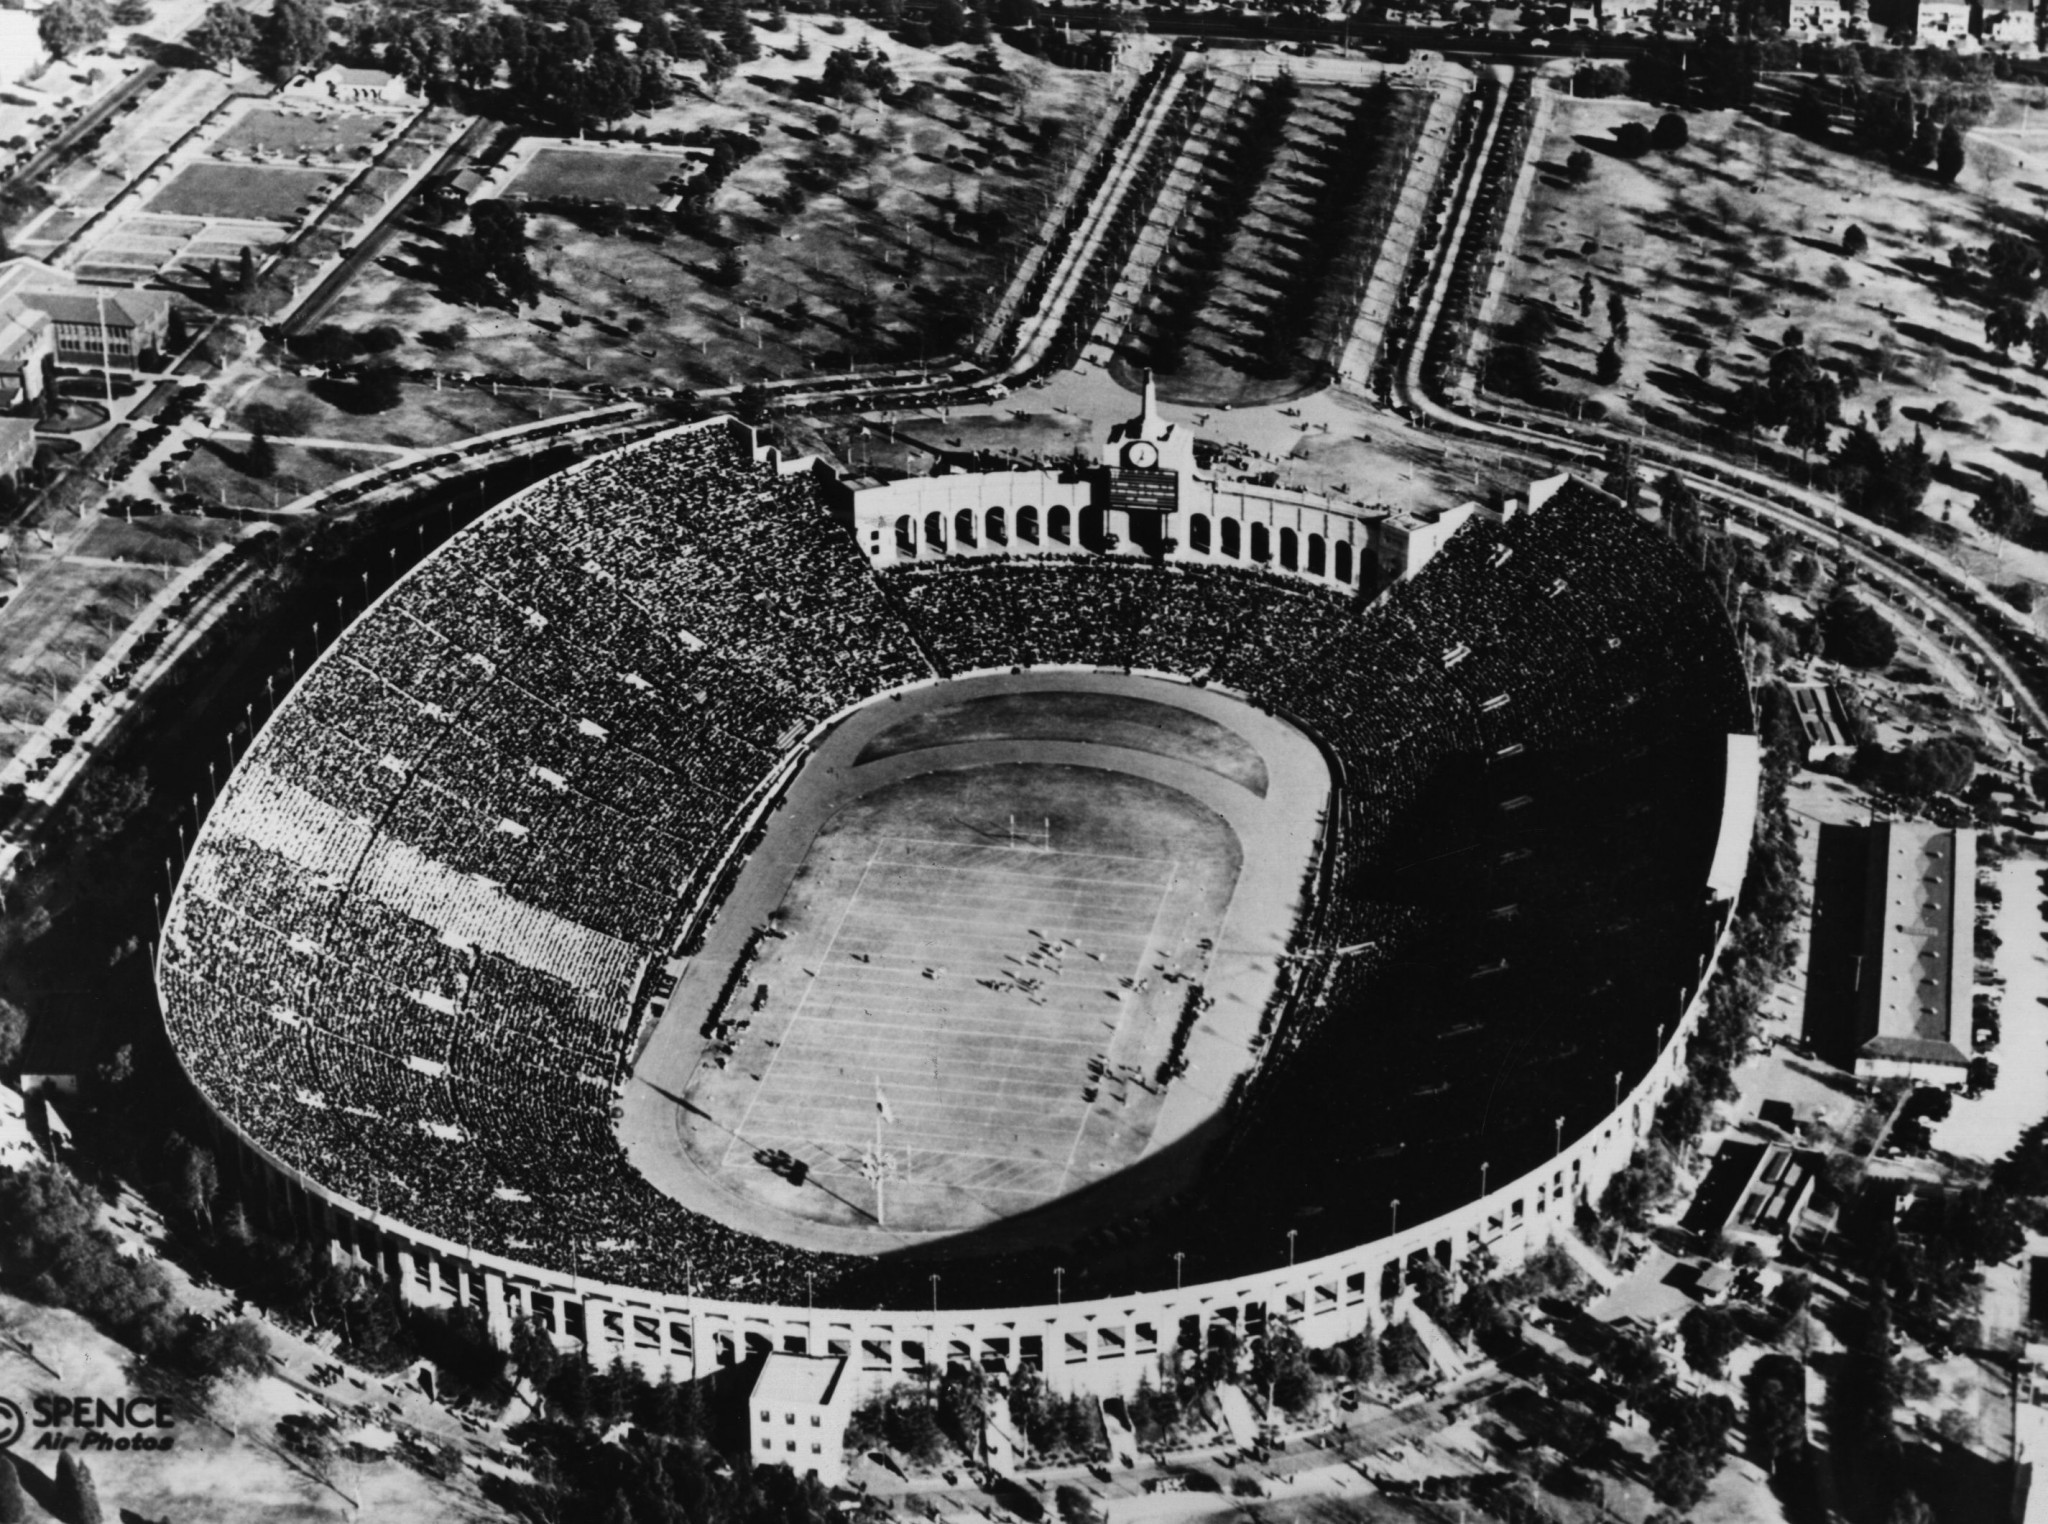 The Coliseum was described as 